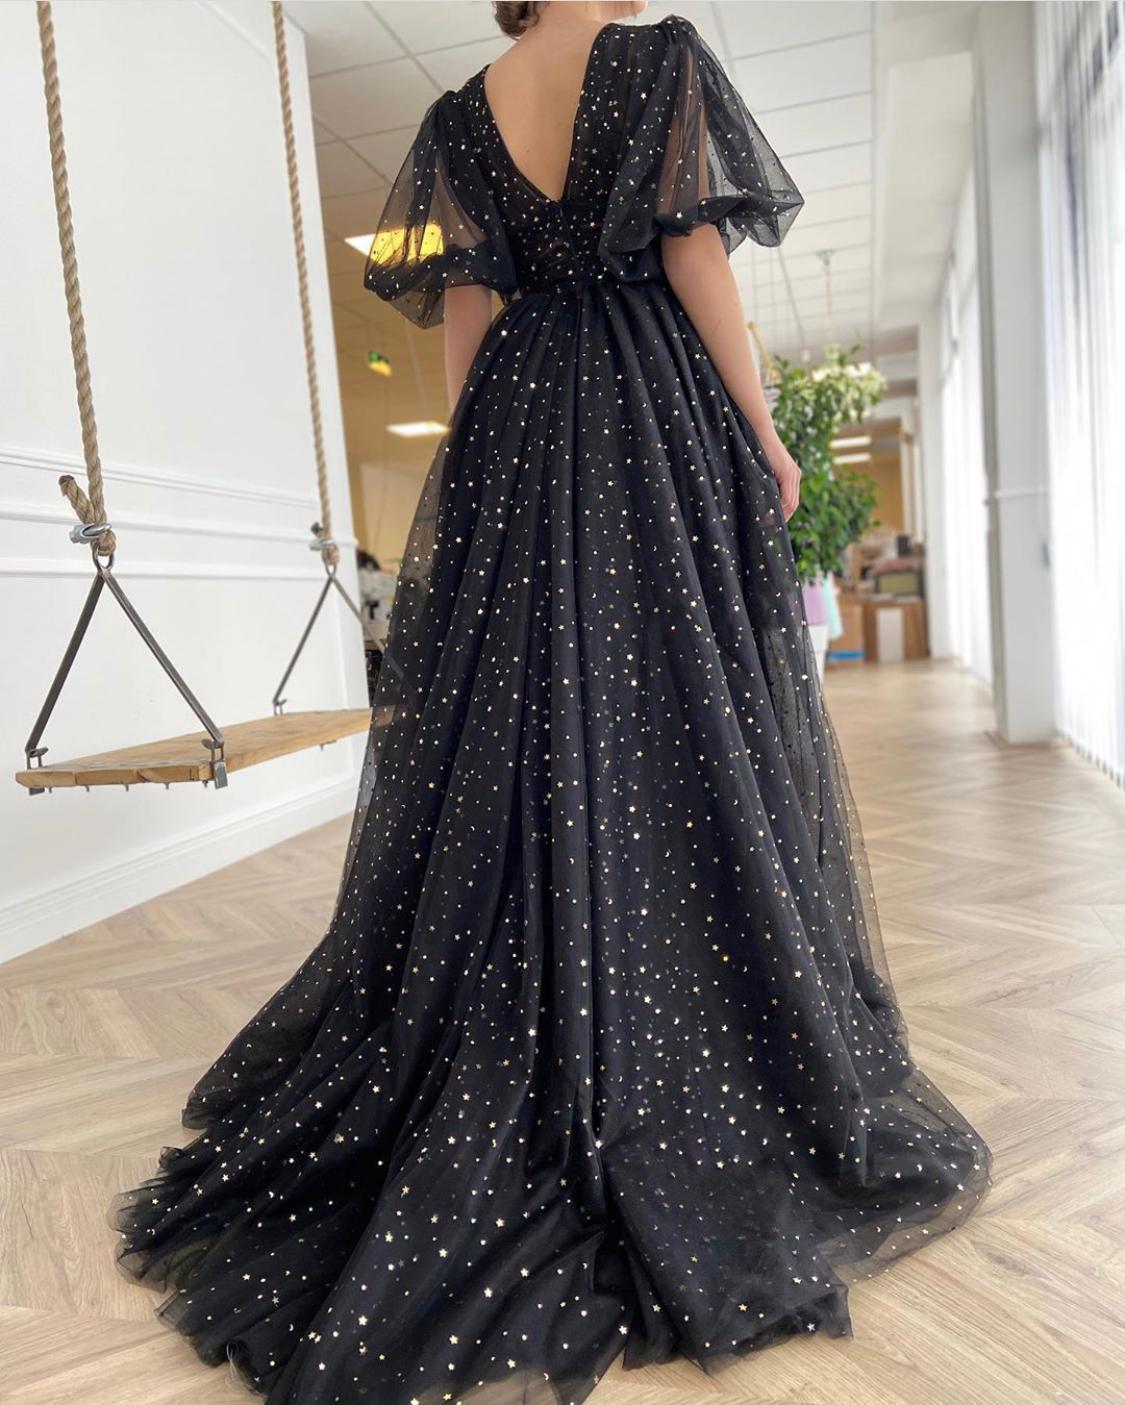 silk night dress in noire – je mérite (i deserve)